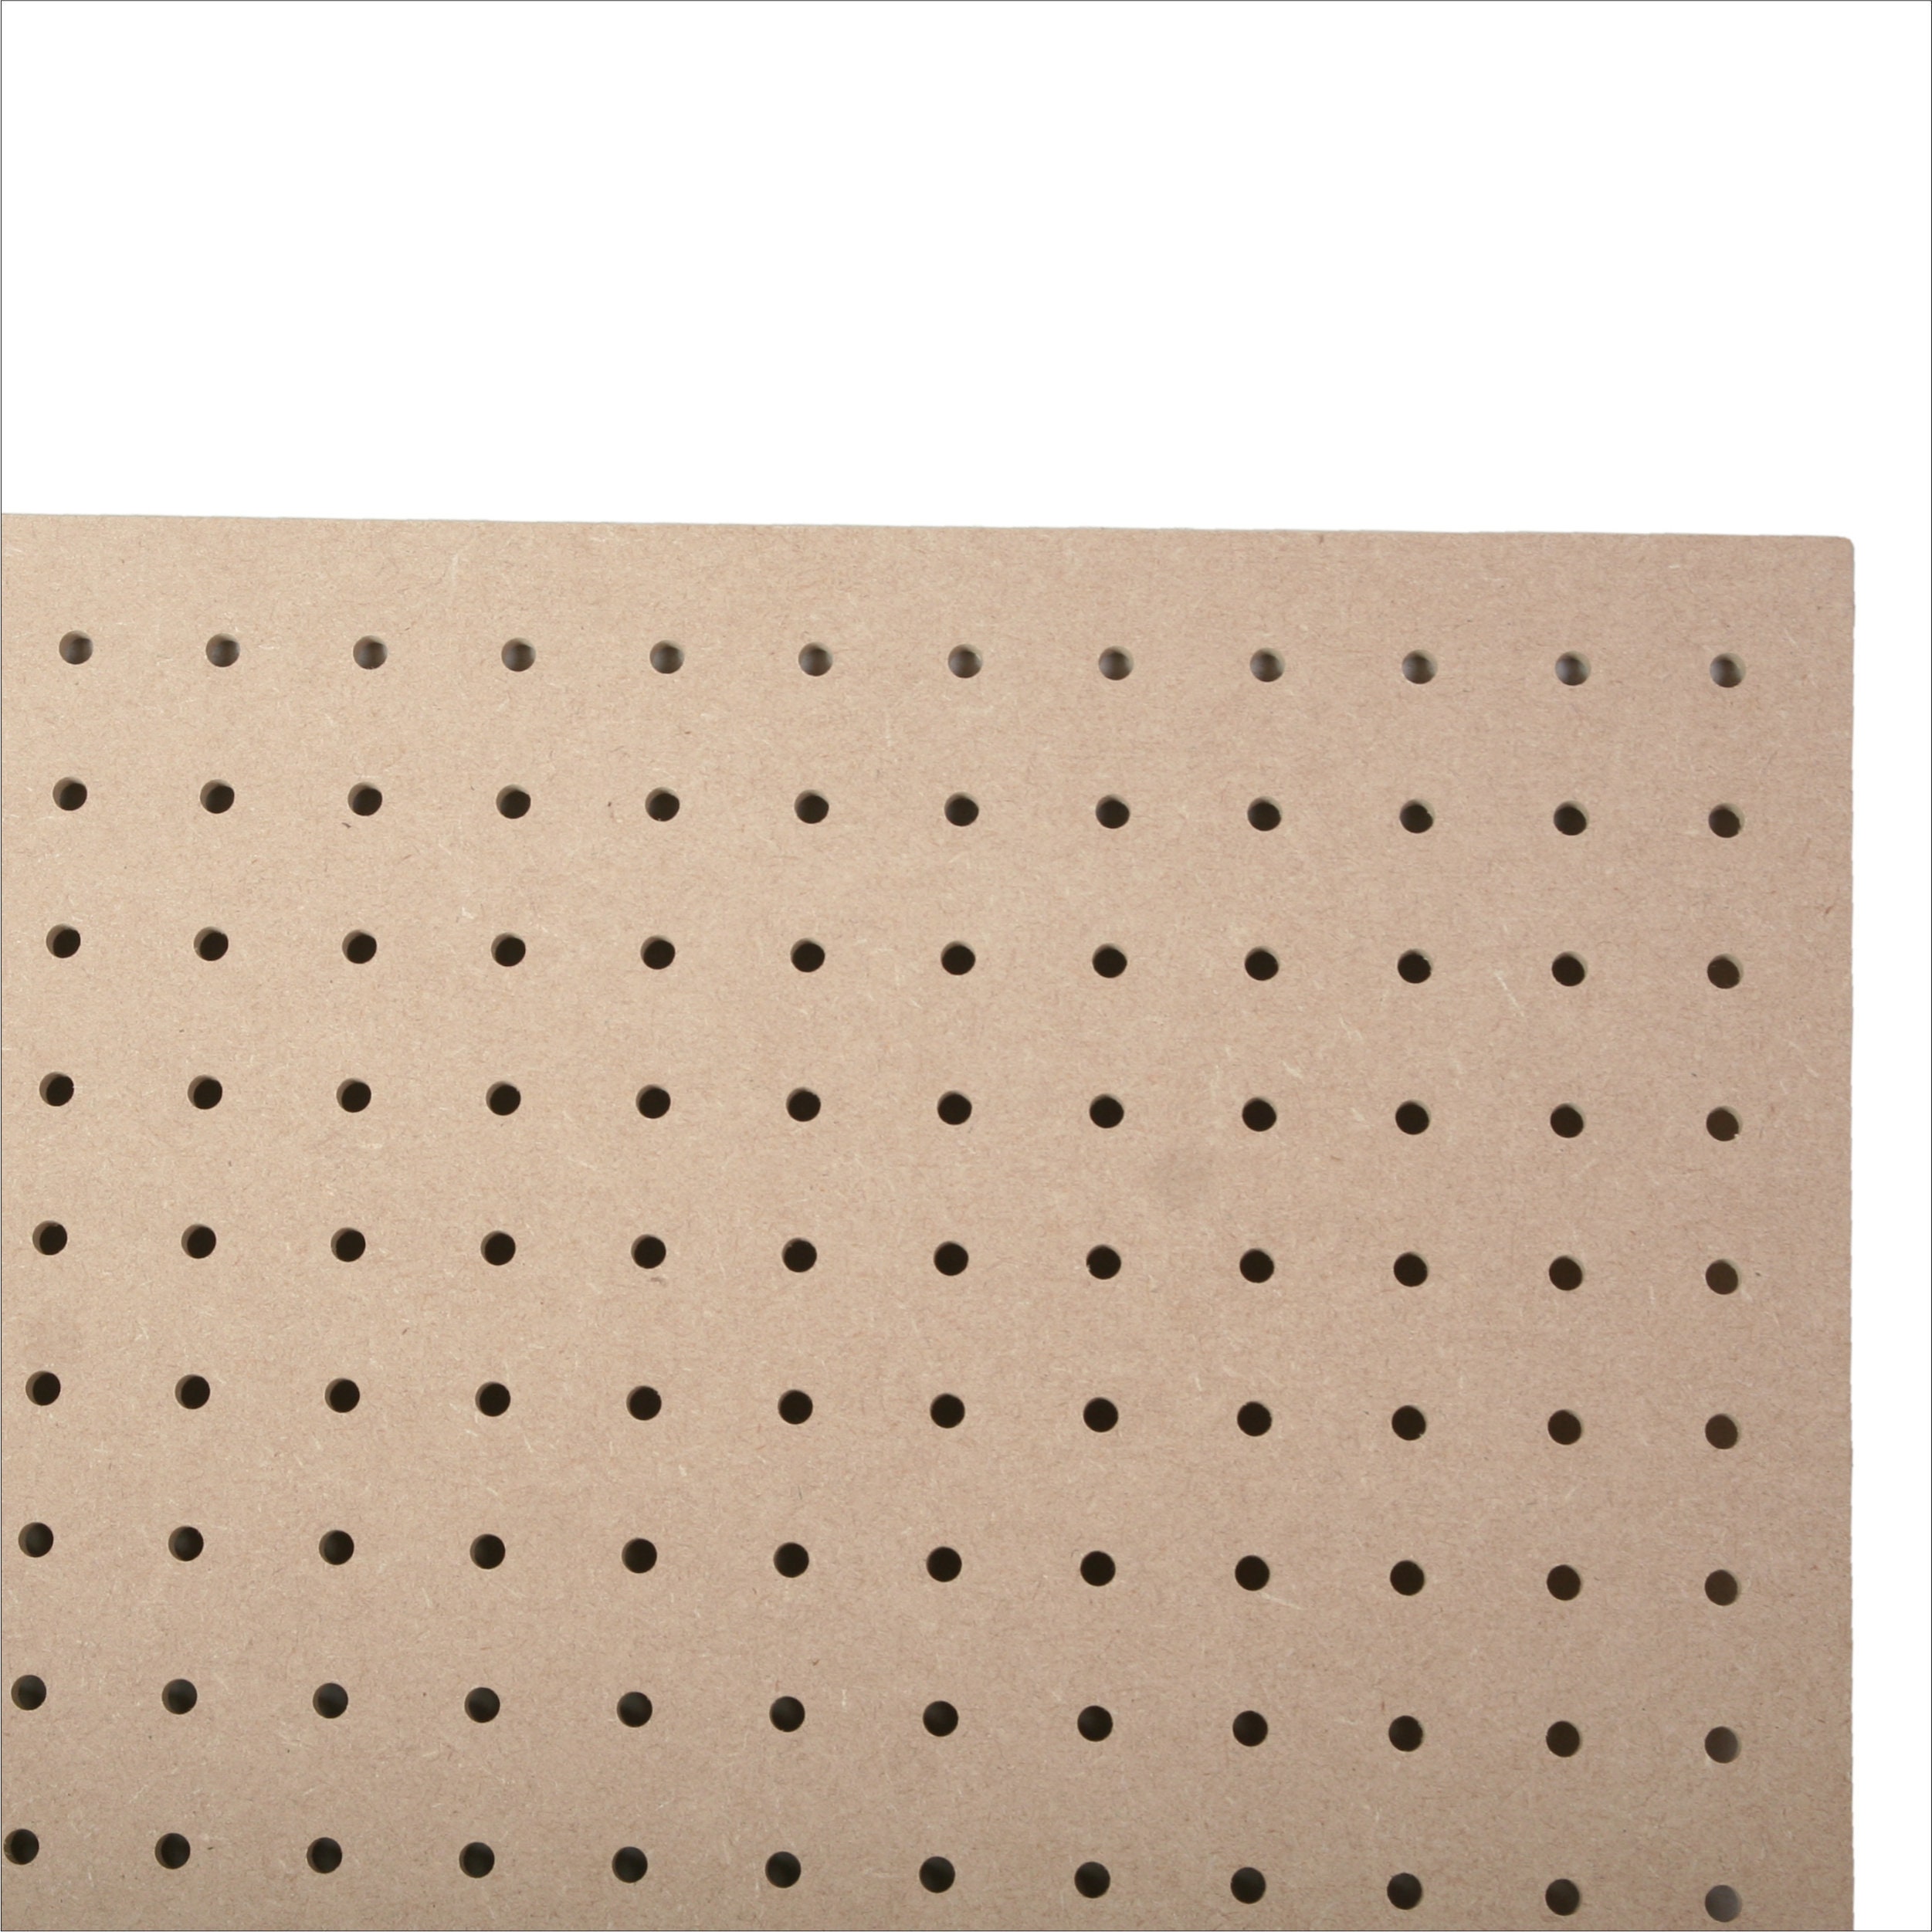 Sheet Pan, full size, 18 x 26, perforated, 1/8 dia. holes